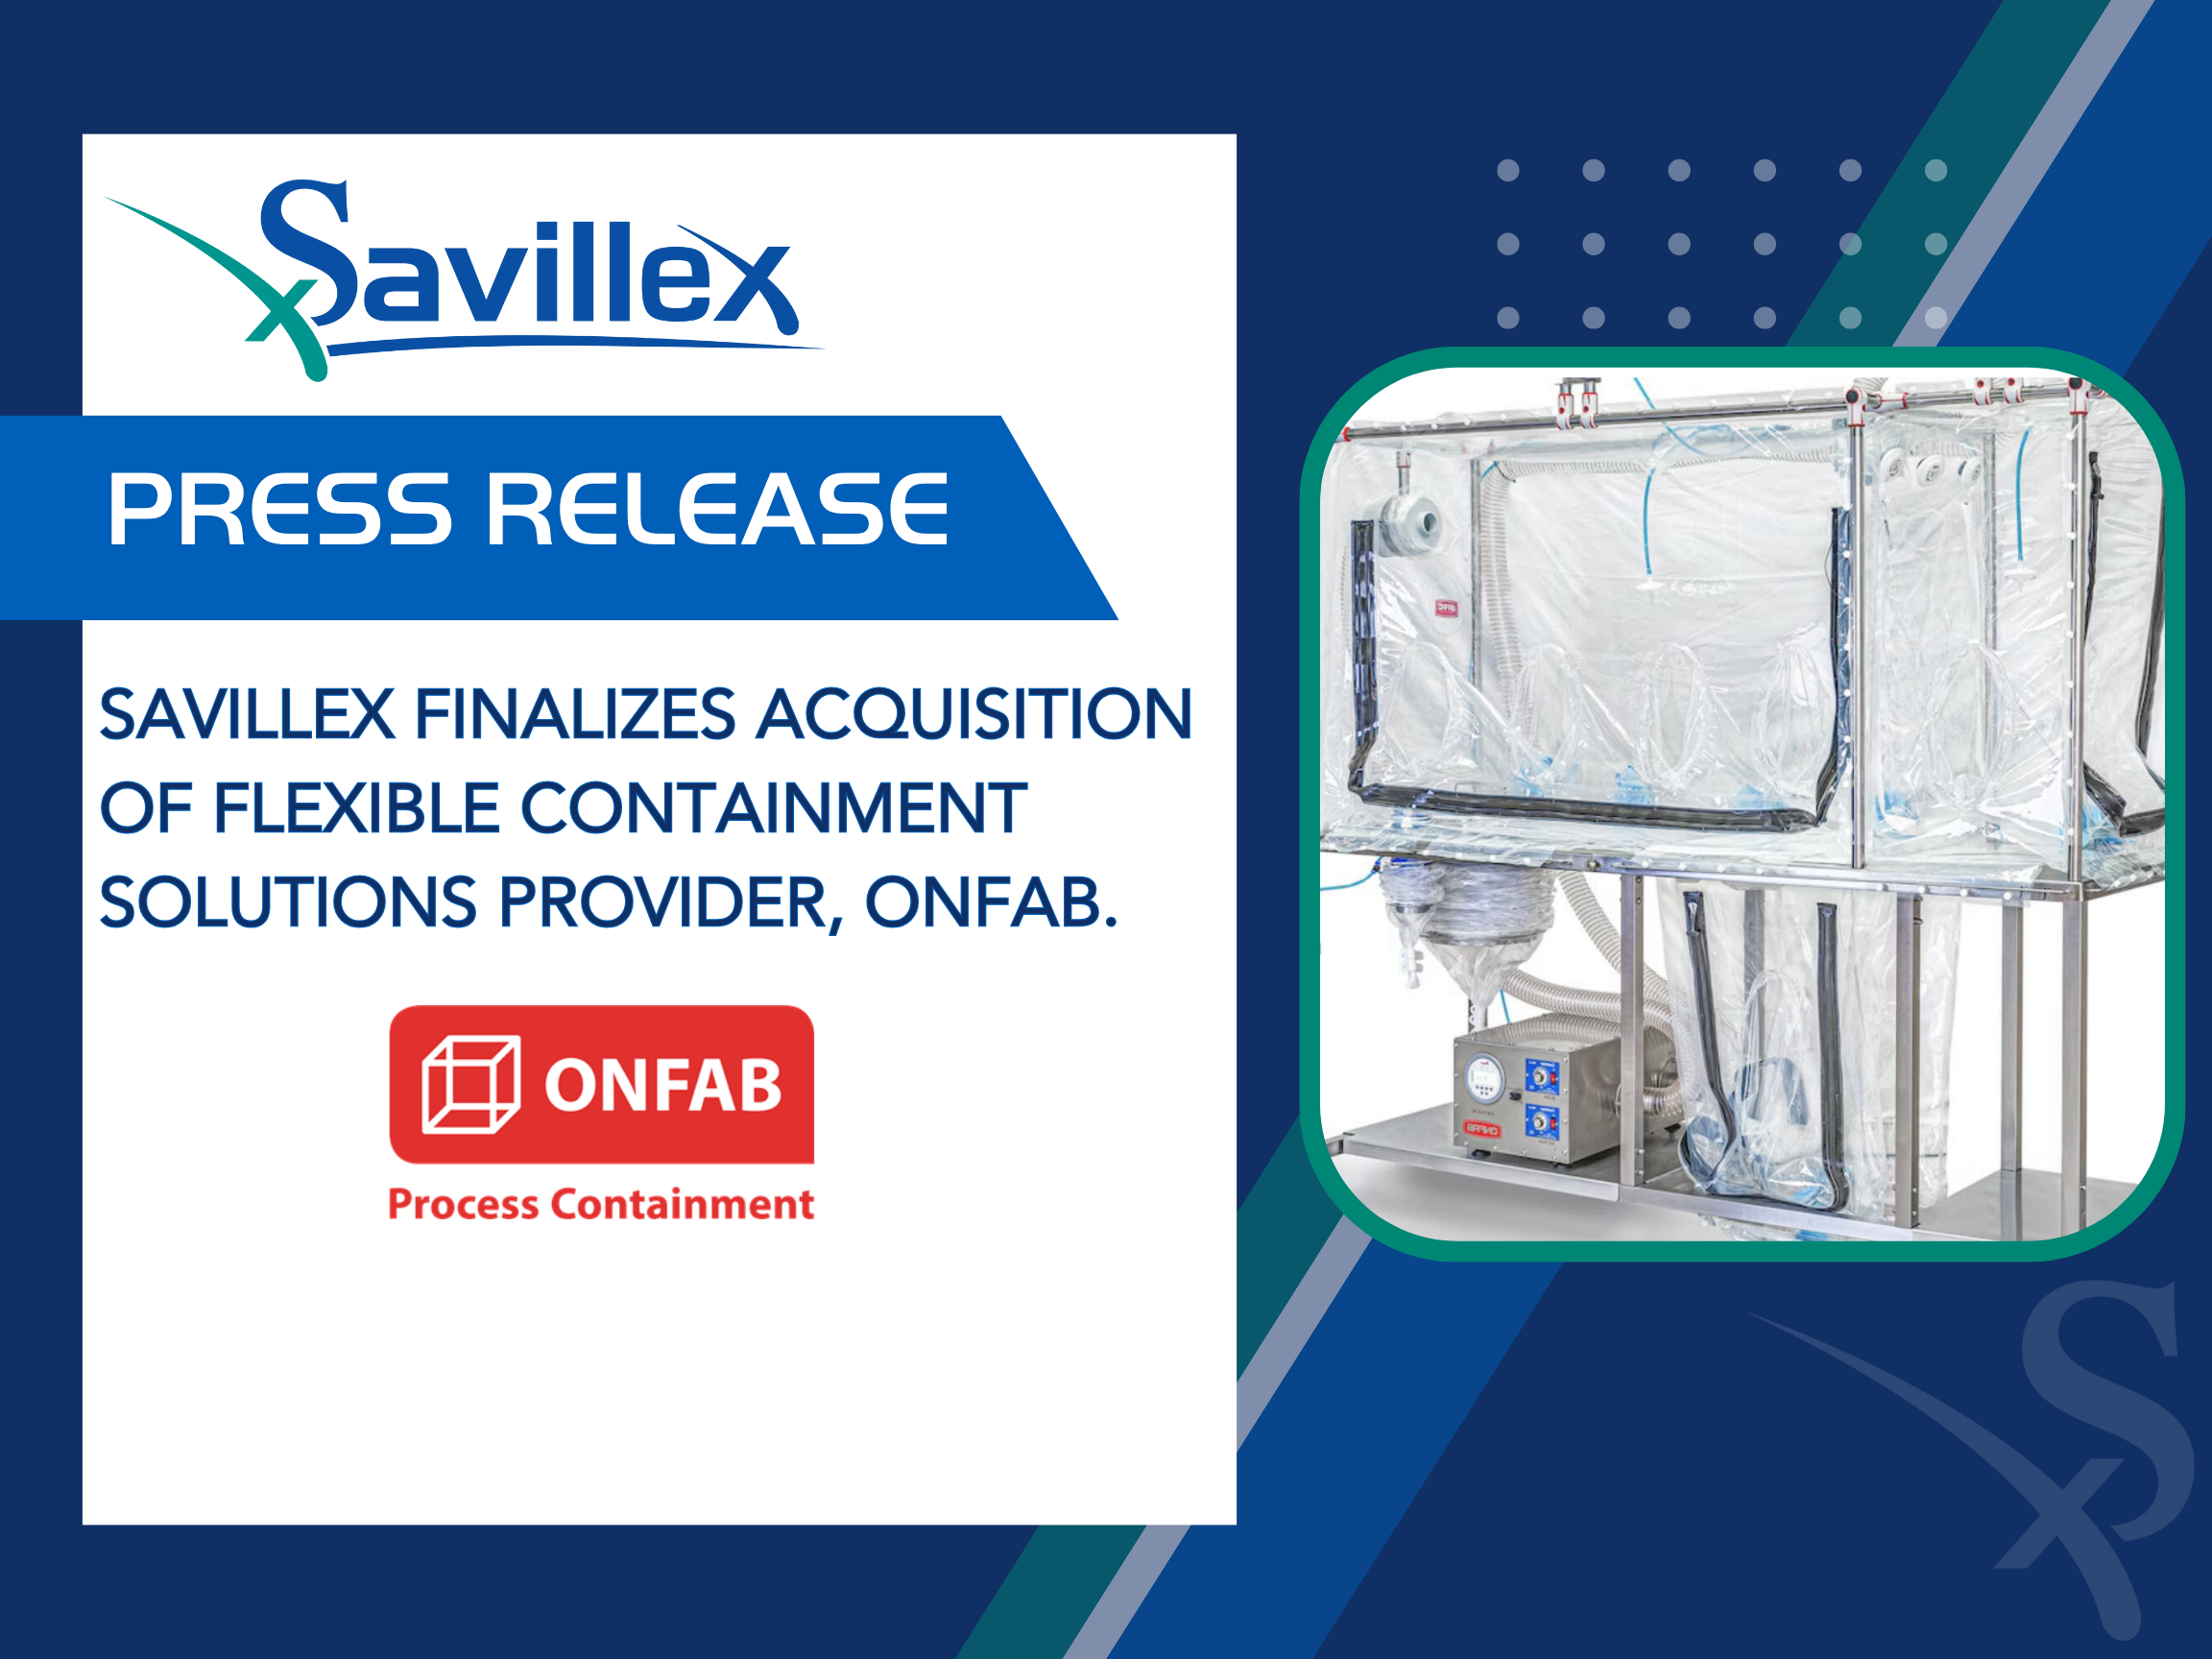 Savillex acquires ONFAB